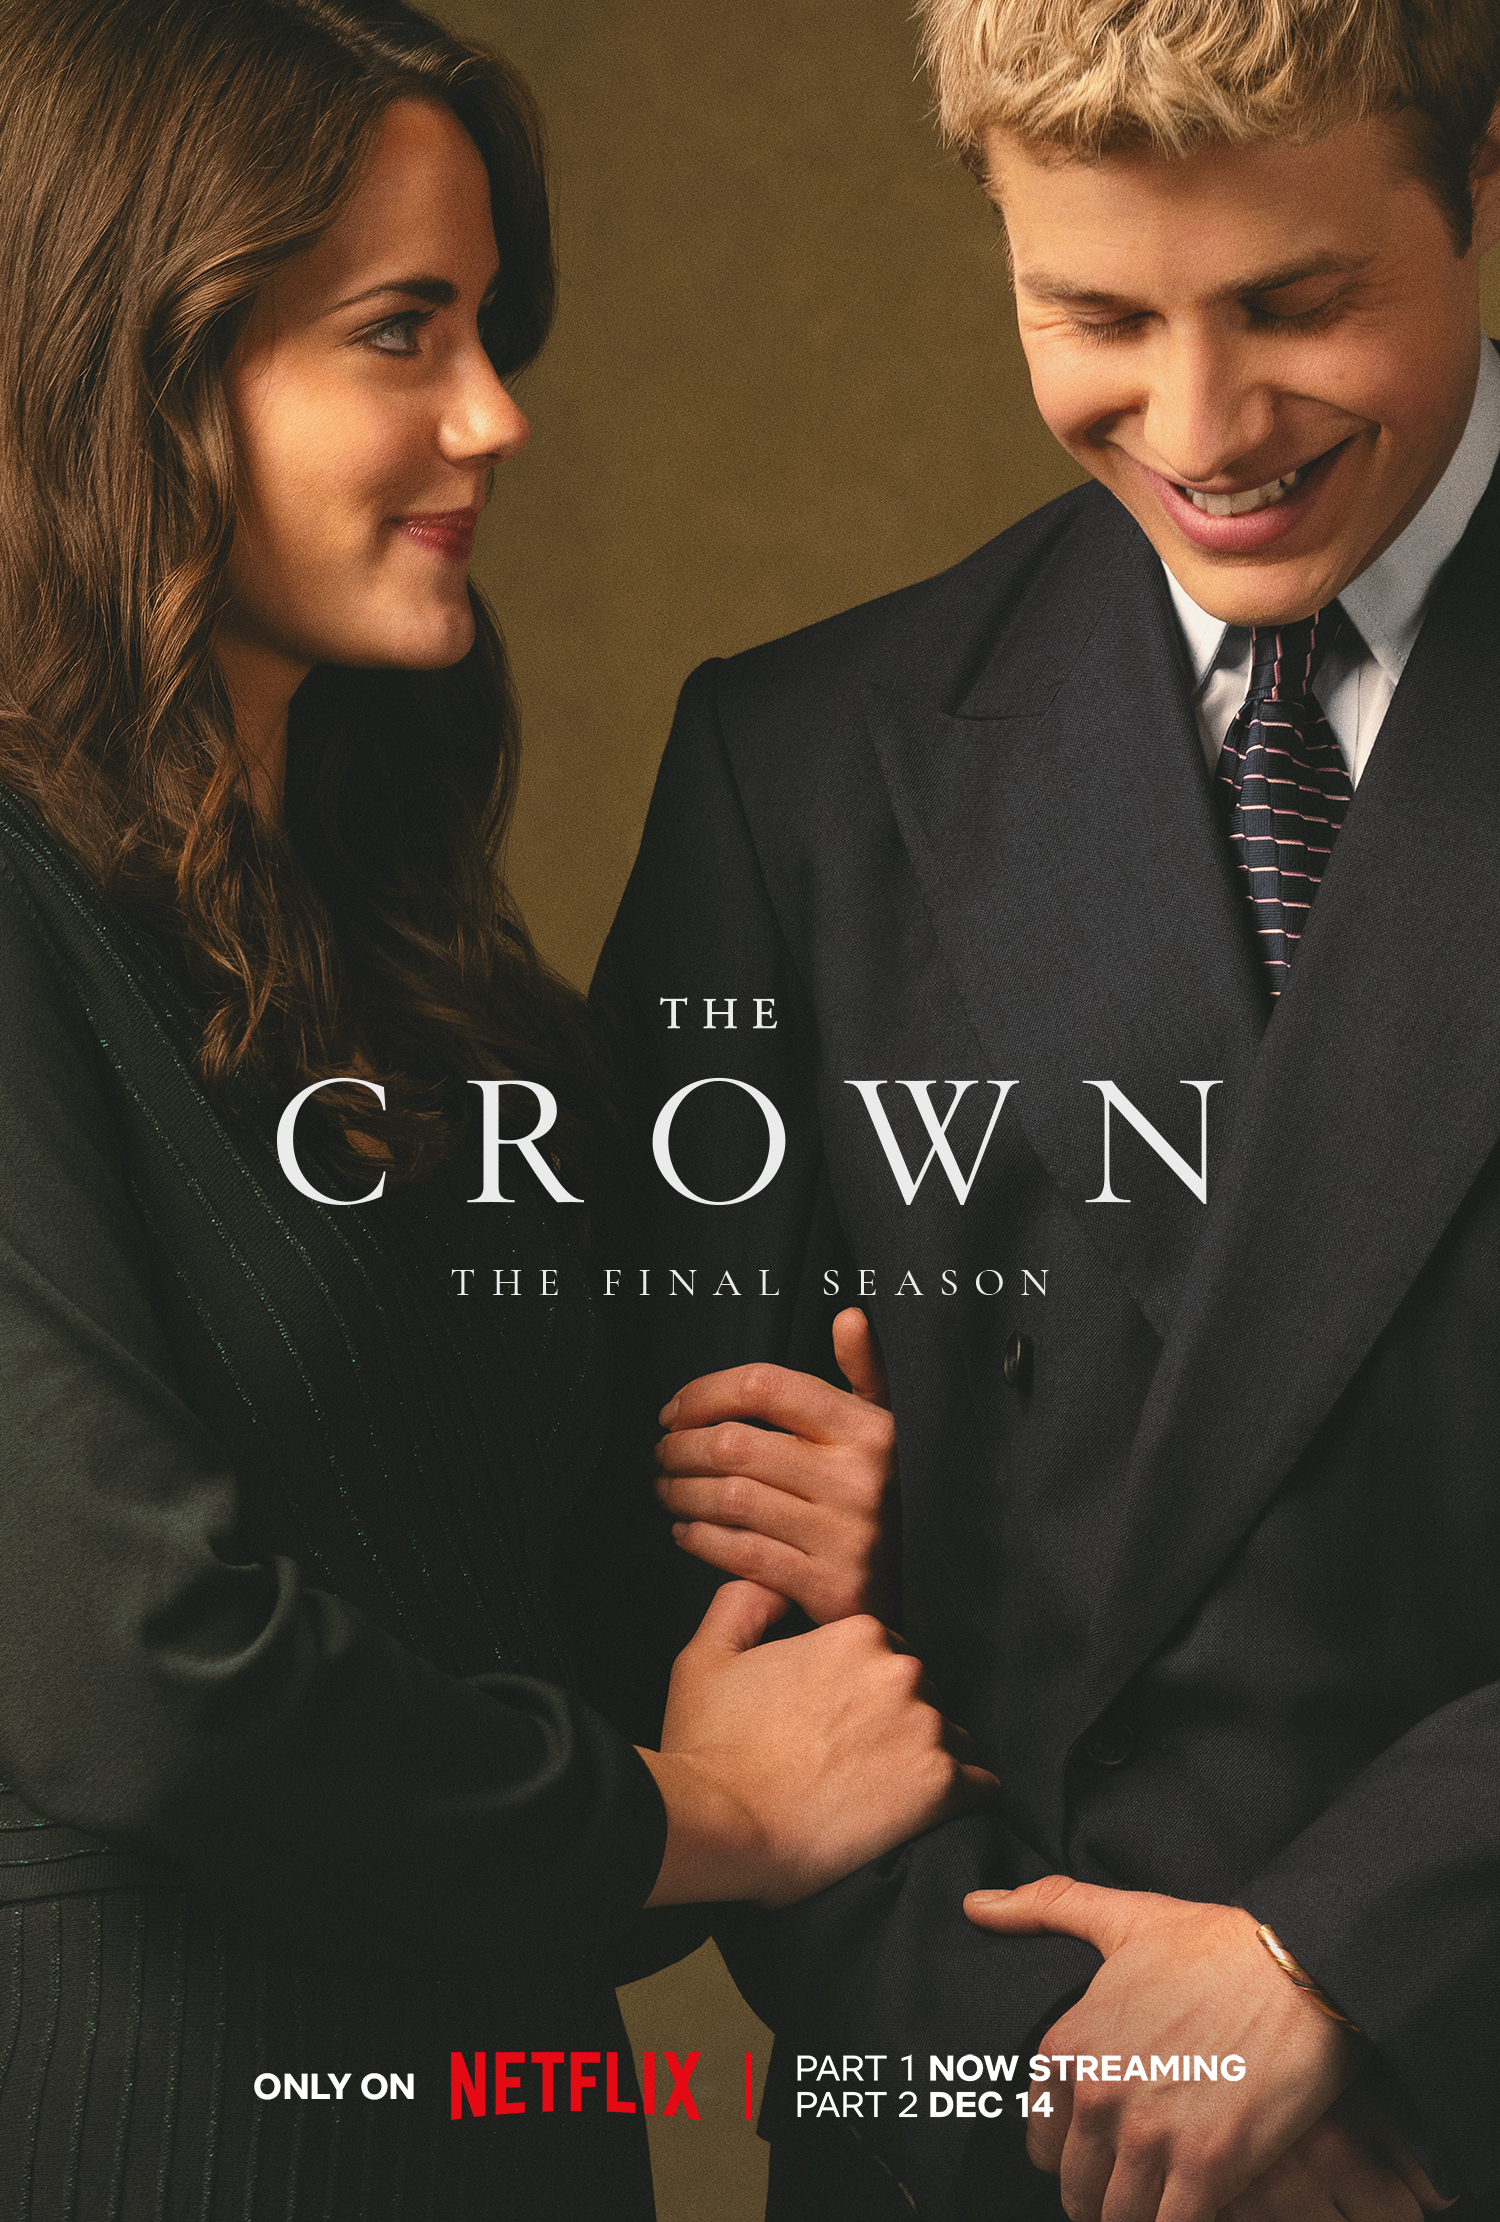 The Crown Season 6 Part 2 Trailer Previews Final Episodes of Netflix Drama